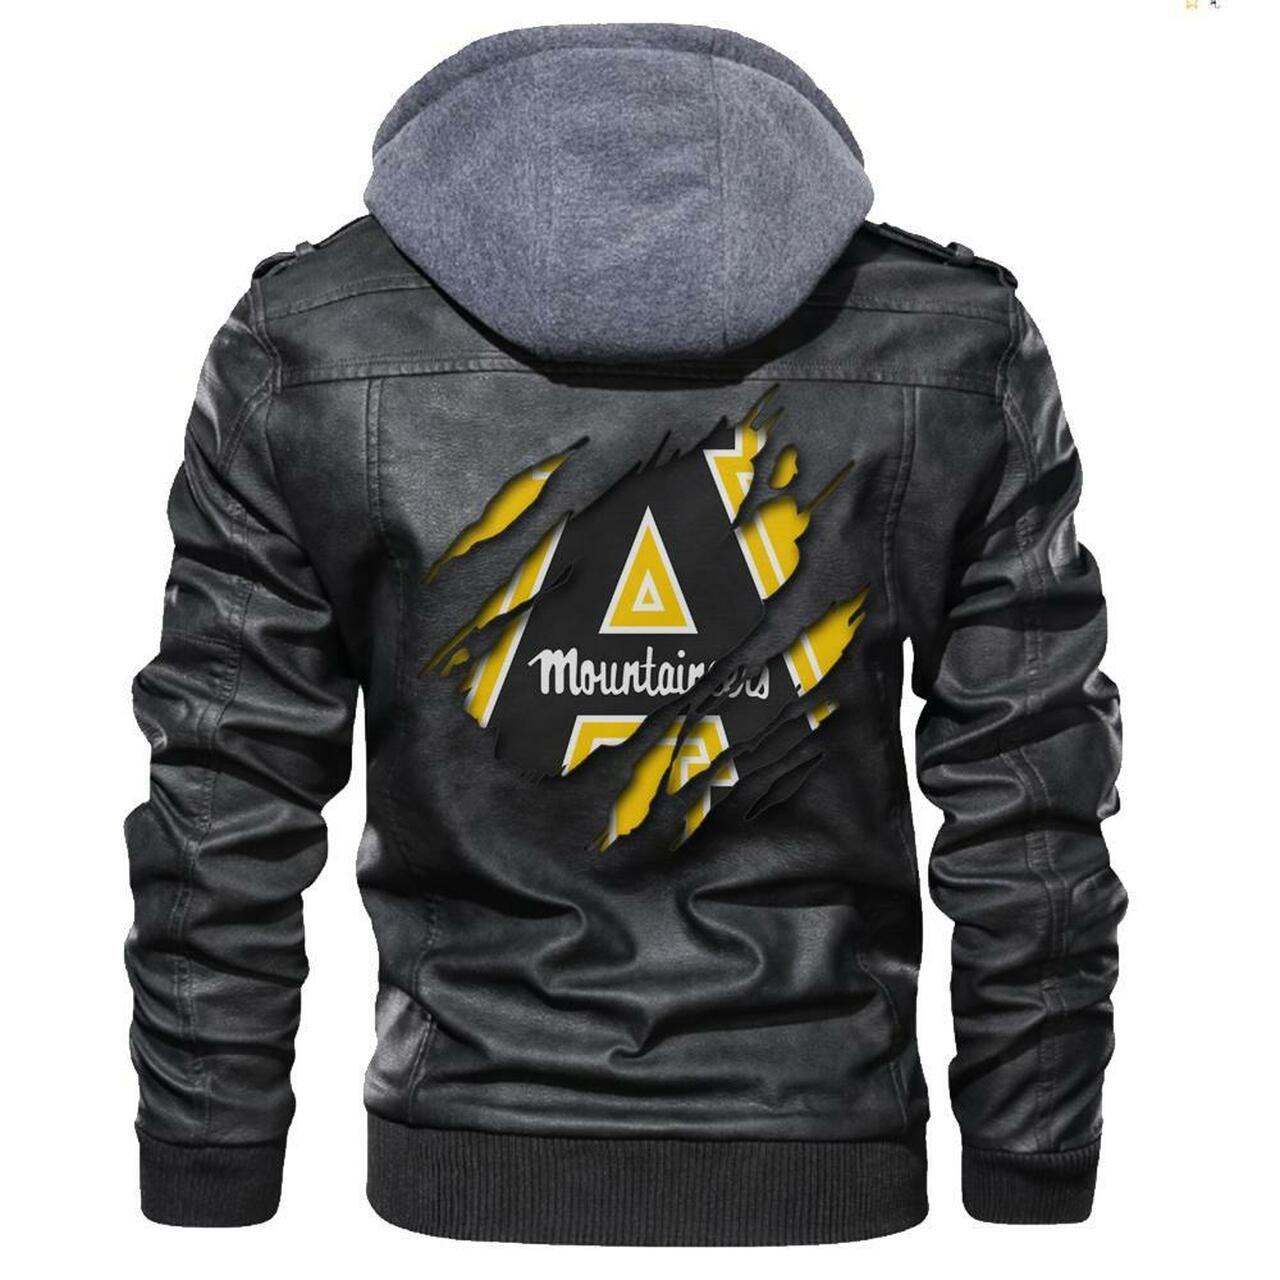 Top leather jacket Sells Best on Techcomshop 68